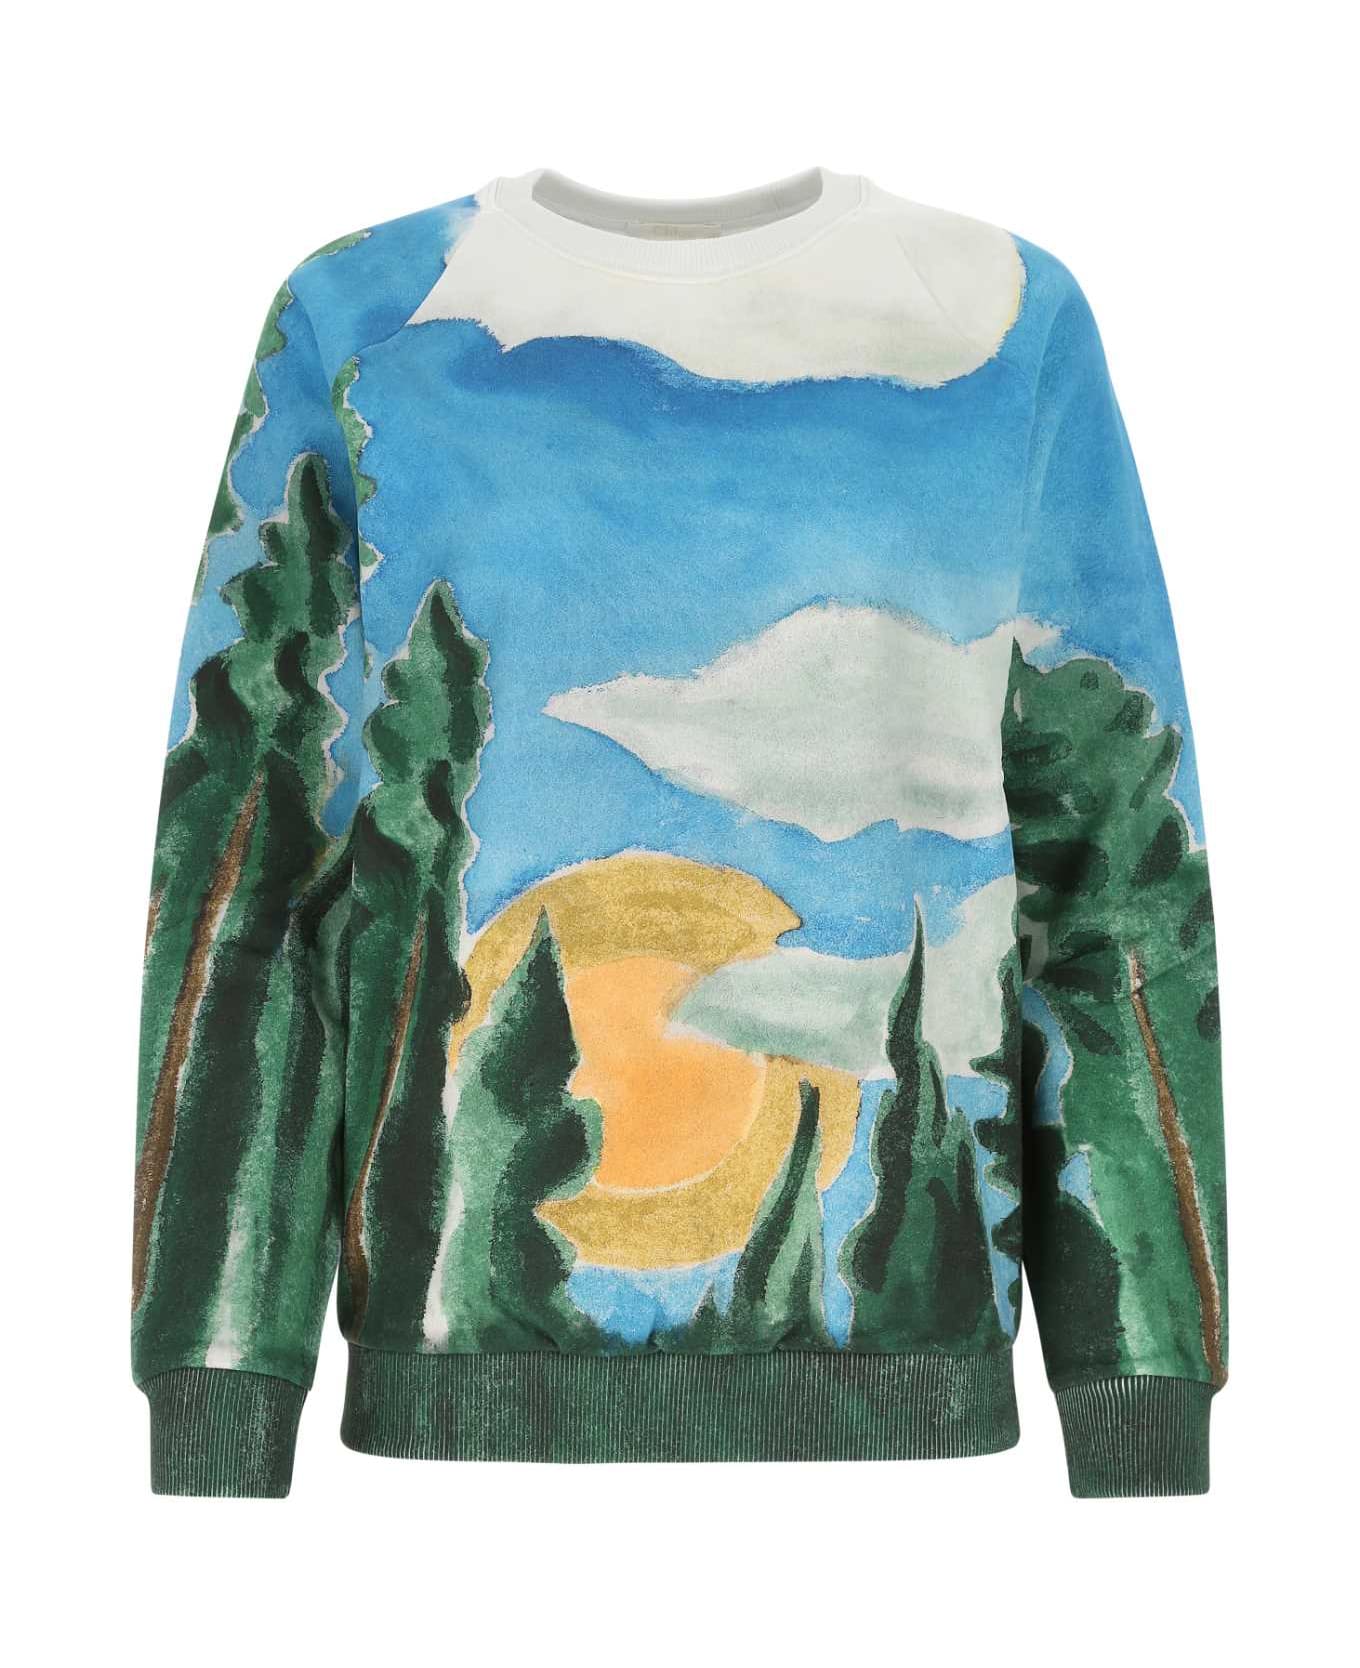 Chloé Printed Cotton Sweatshirt - 39D フリース